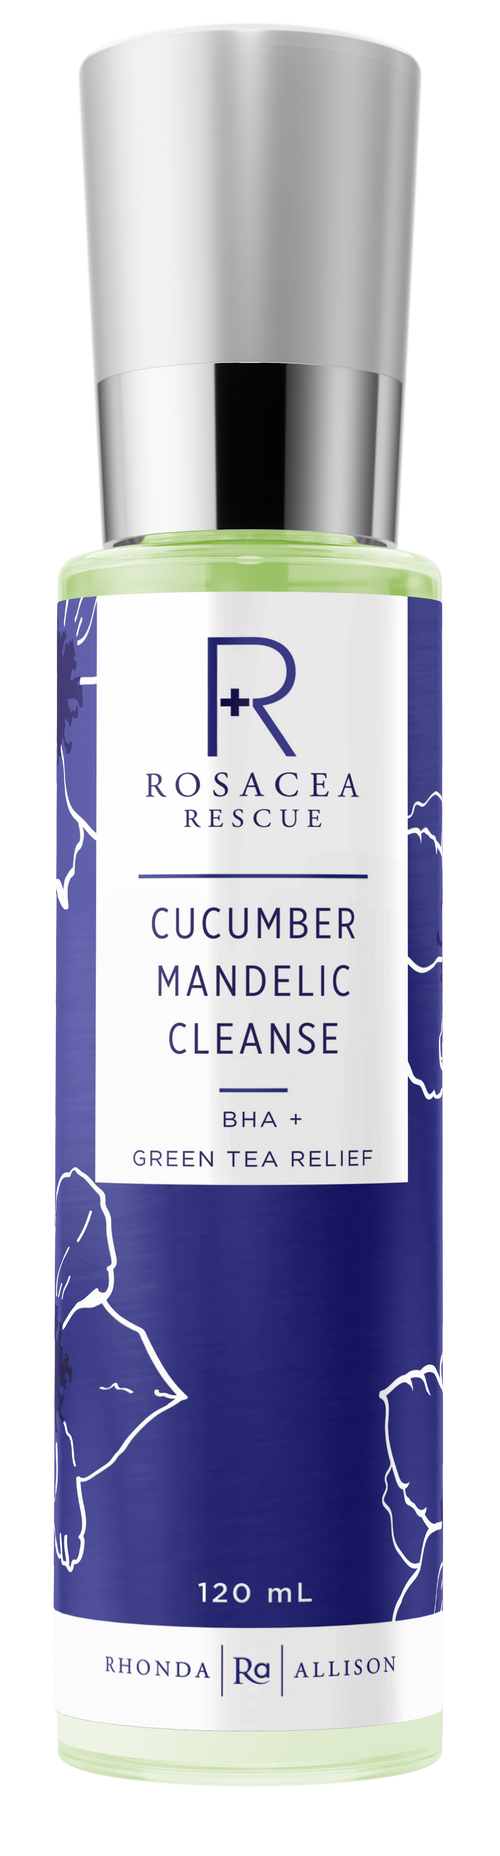 Cucumber Mandelic Cleanse